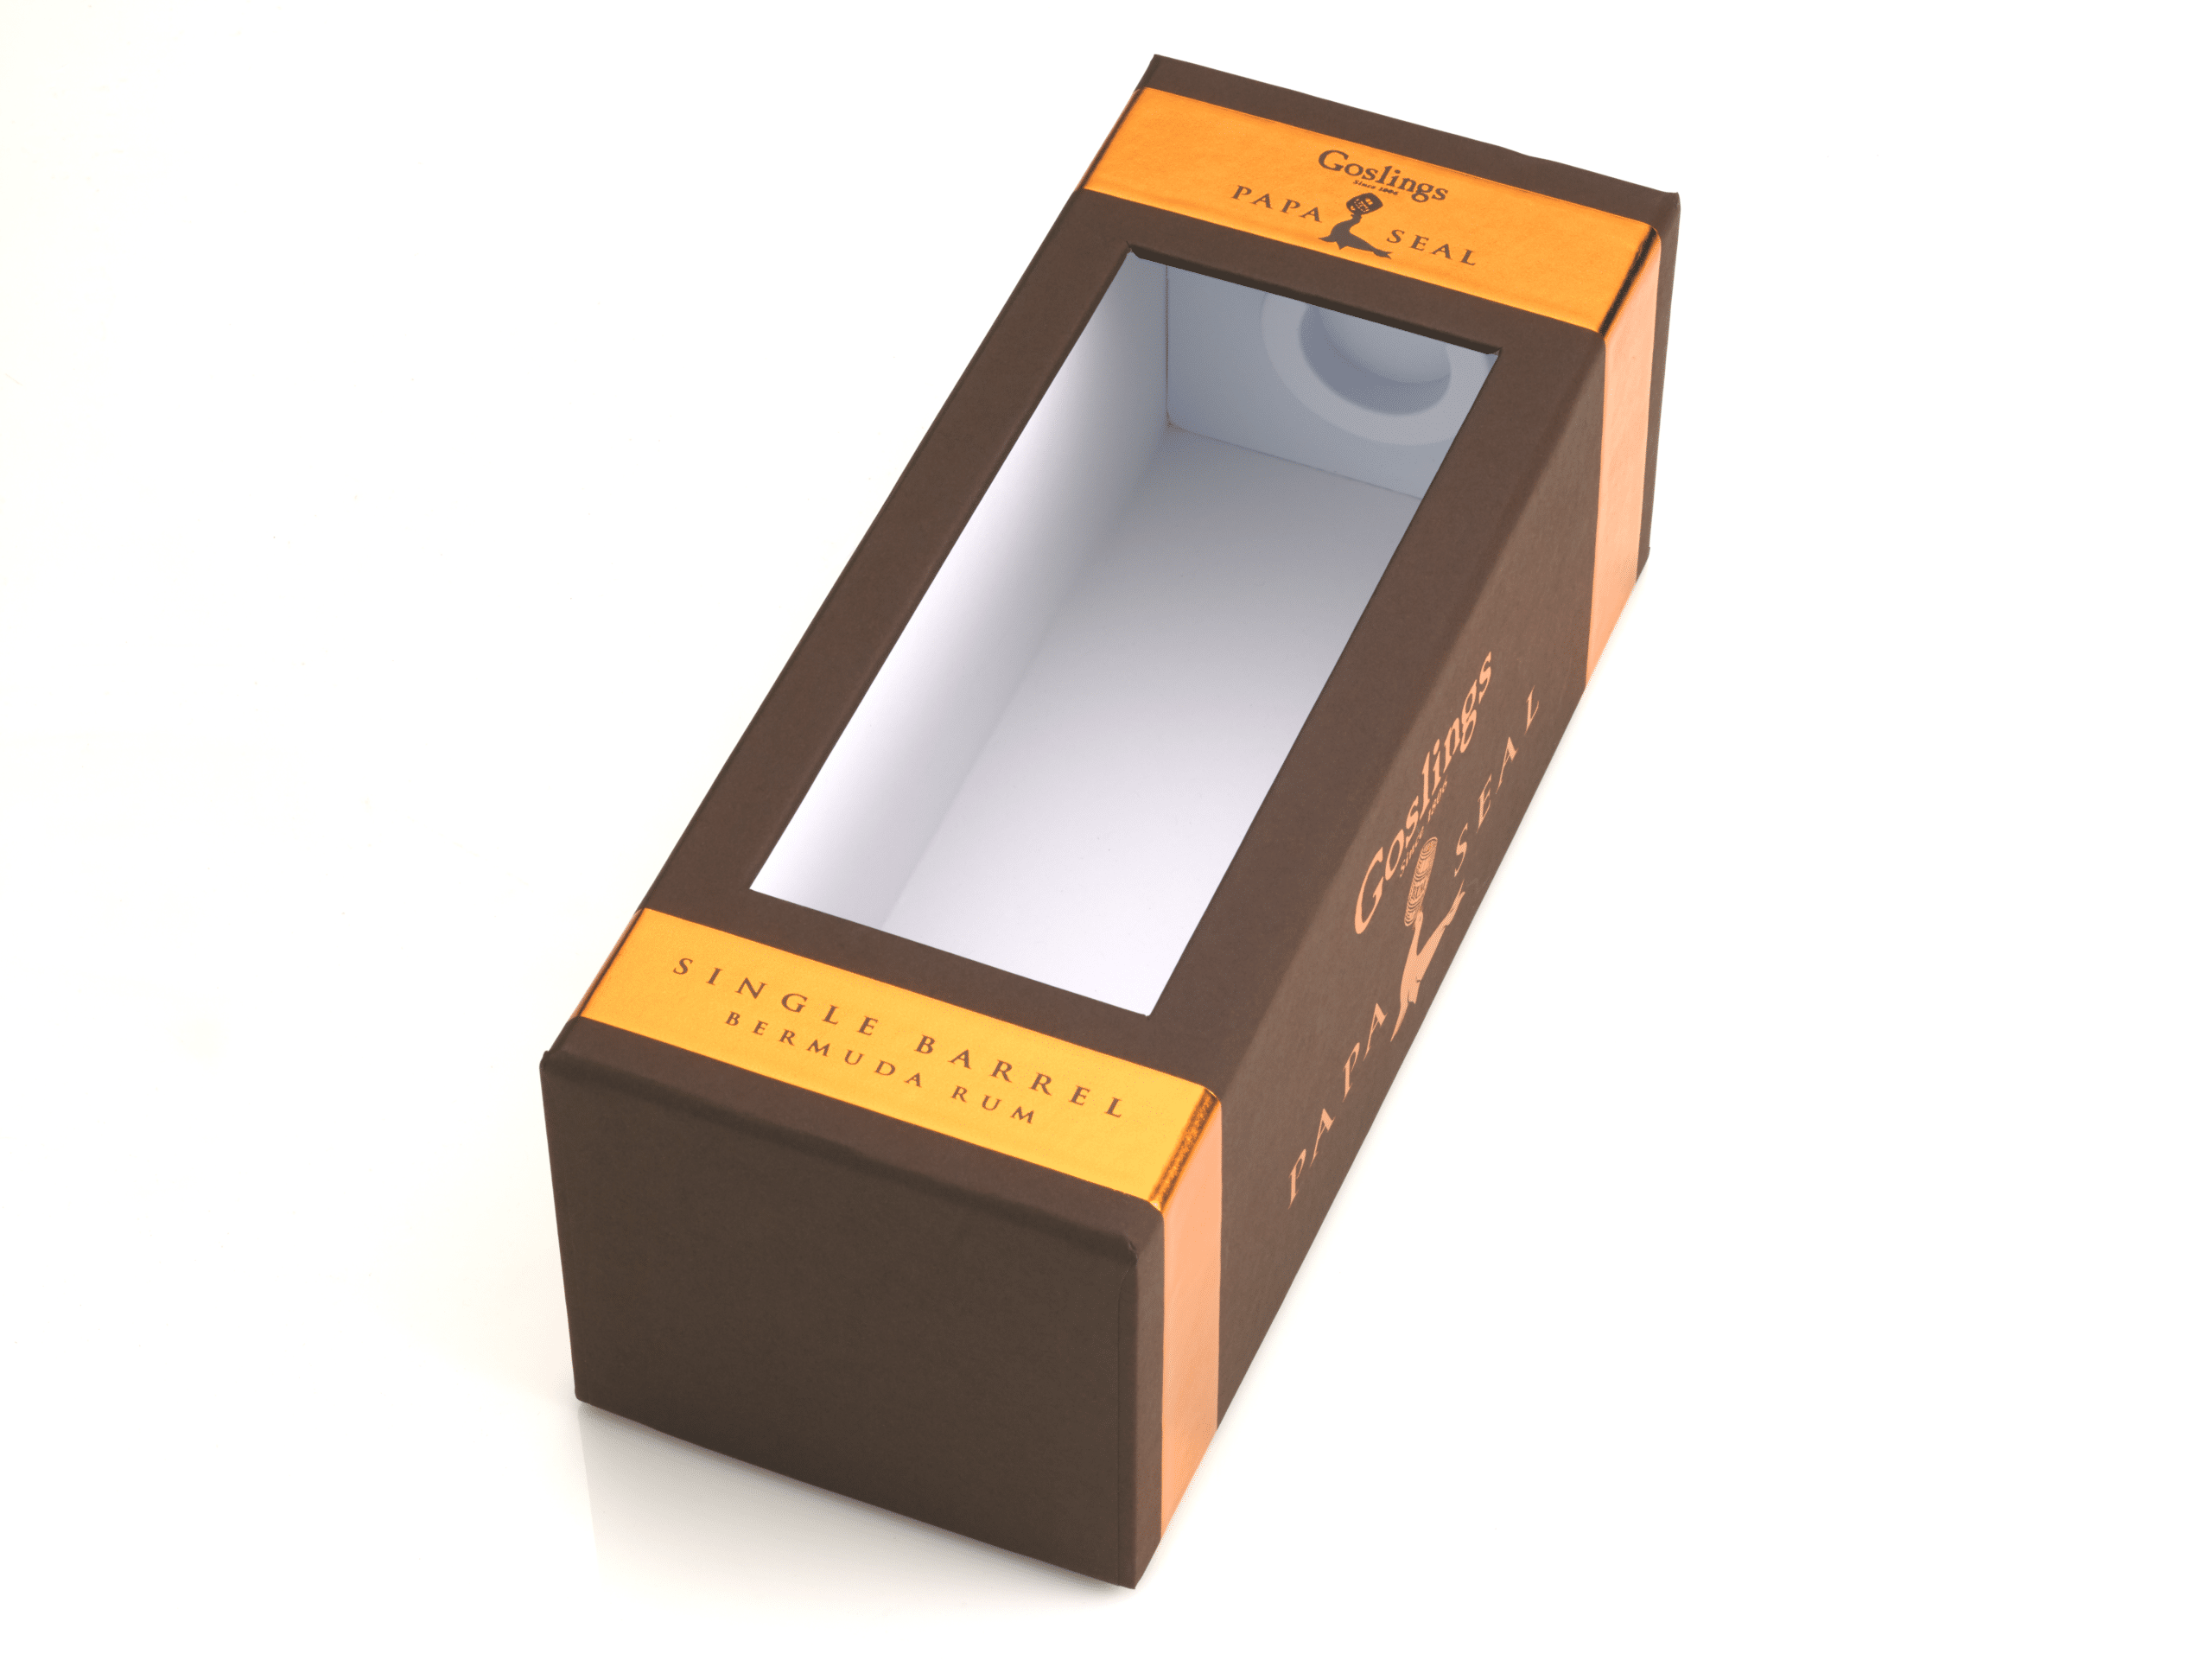 limited edition box, box of the month, Pusterla US, packaging design, liquor packaging, liquor box, custom packaging, rigid box, goslings papa seal, goslings rum